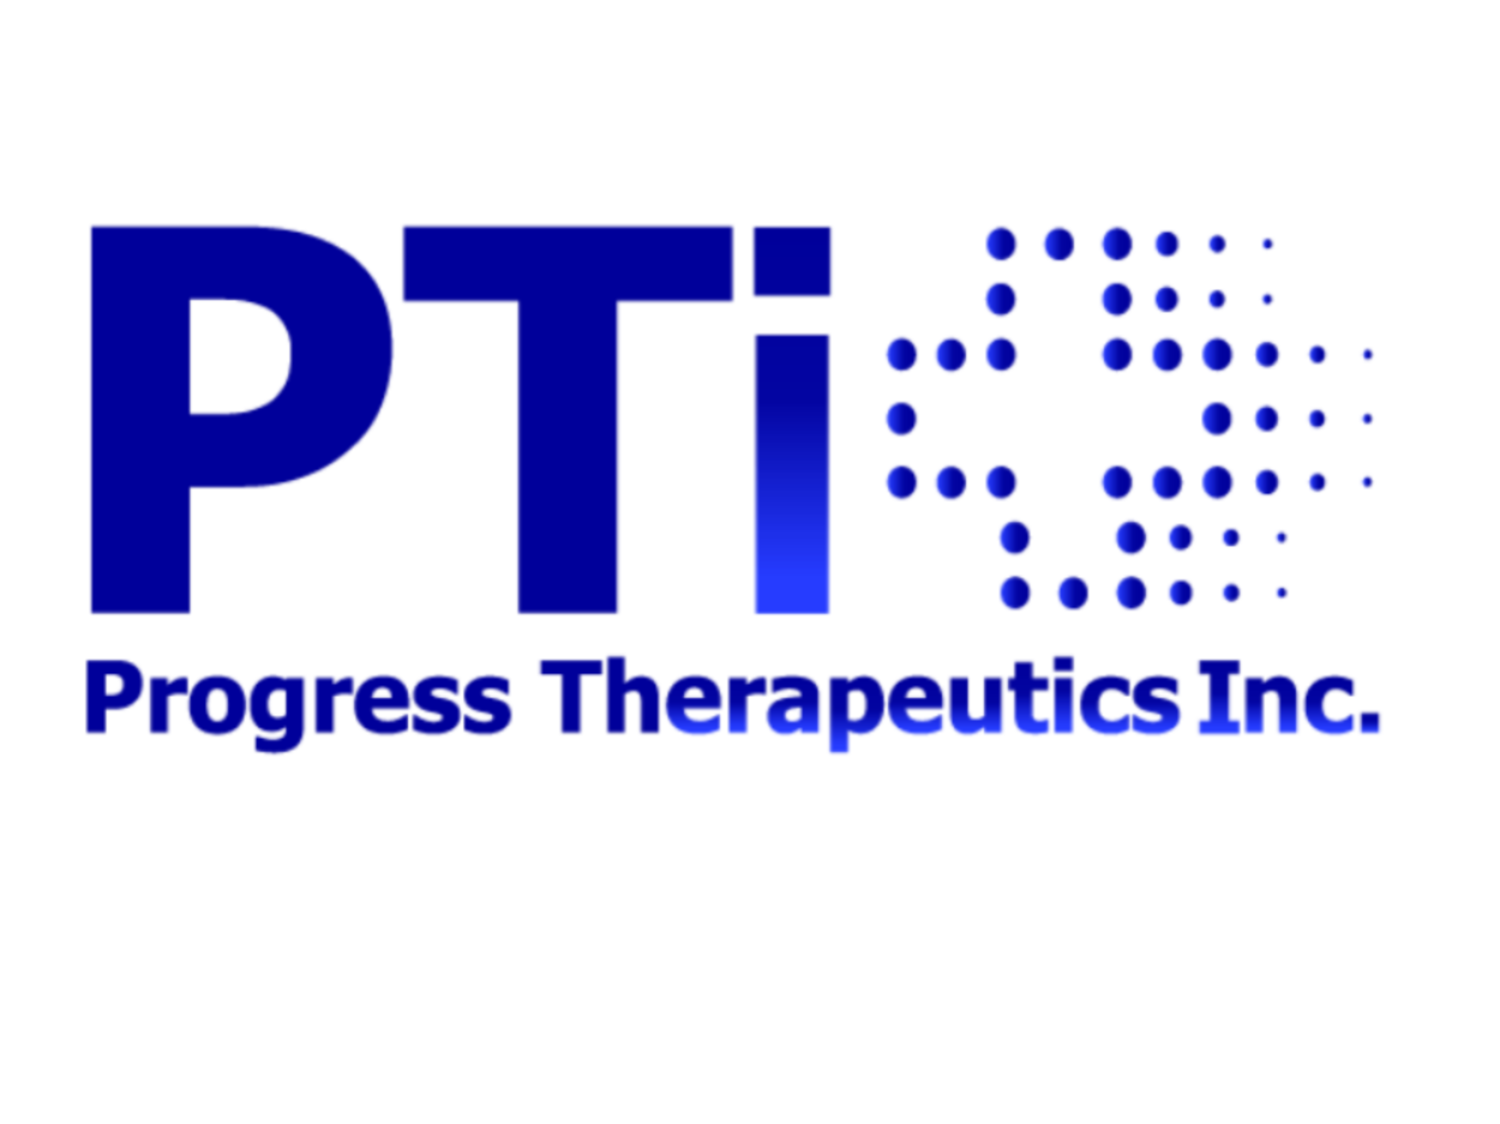 Progress Therapeutics Inc.